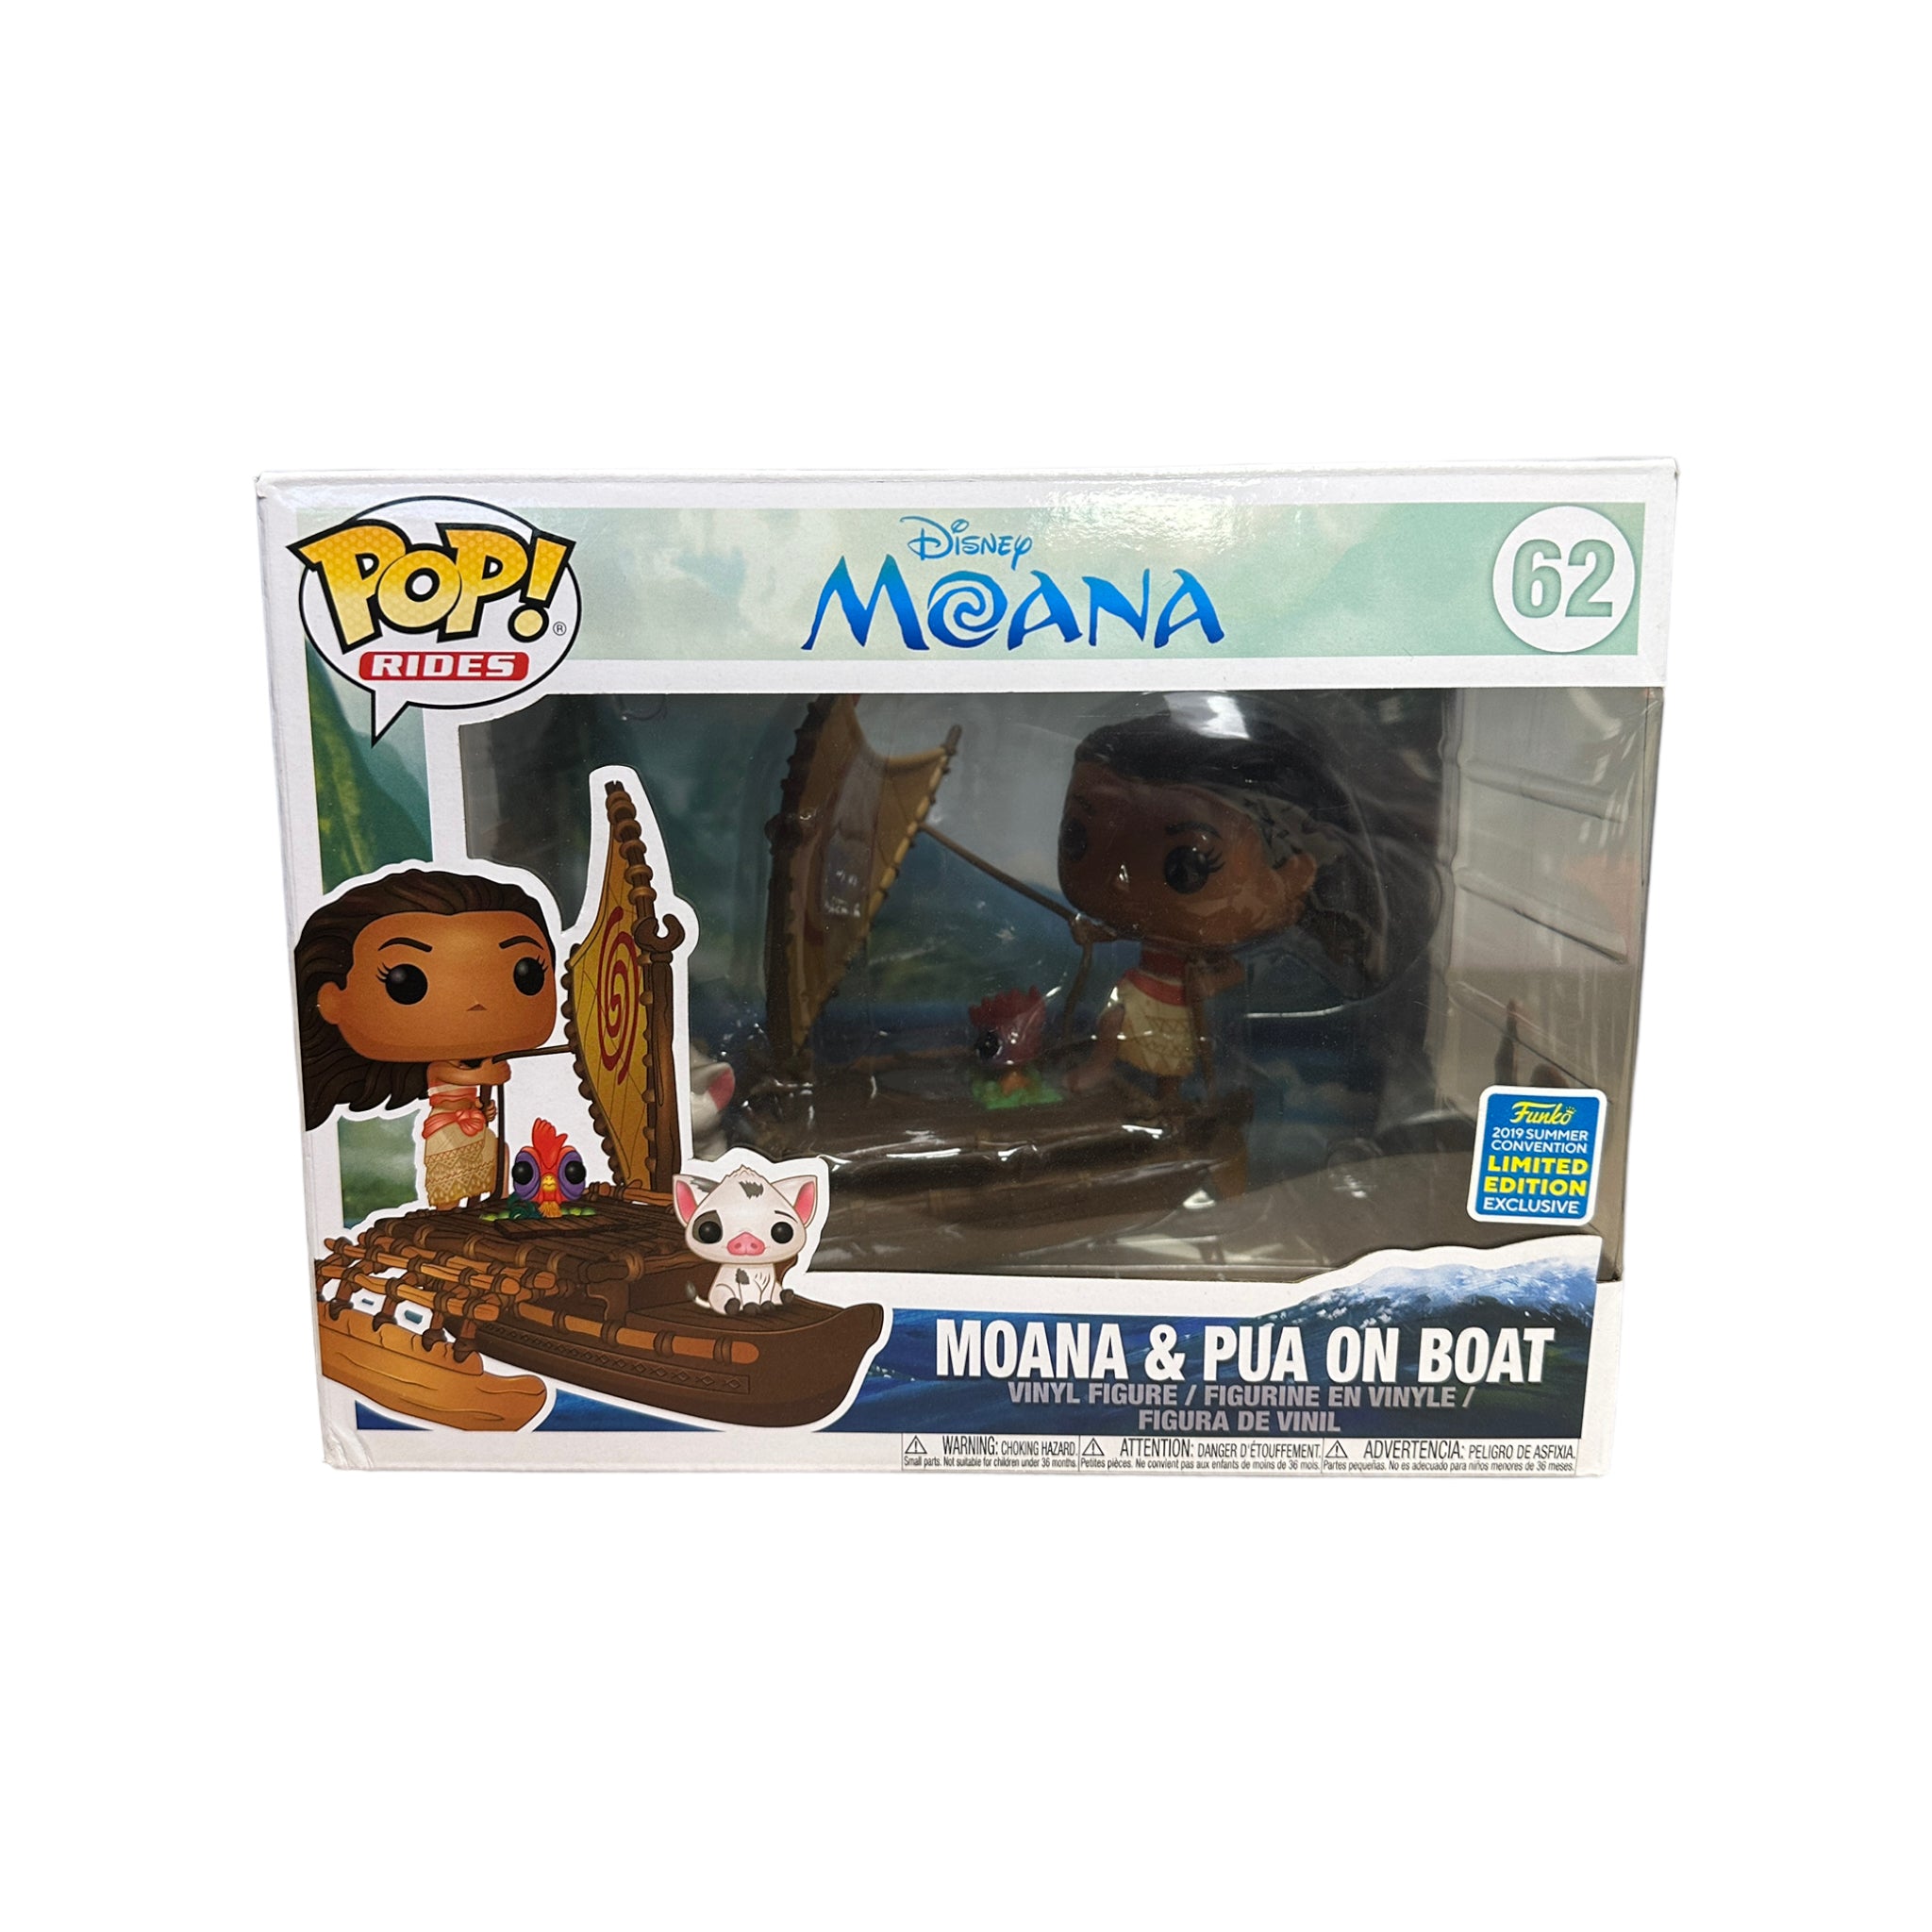 Moana & Pua on Boat #62 Funko Pop Ride! - Moana - SDCC 2019 Shared Exclusive - Condition 8.75/10